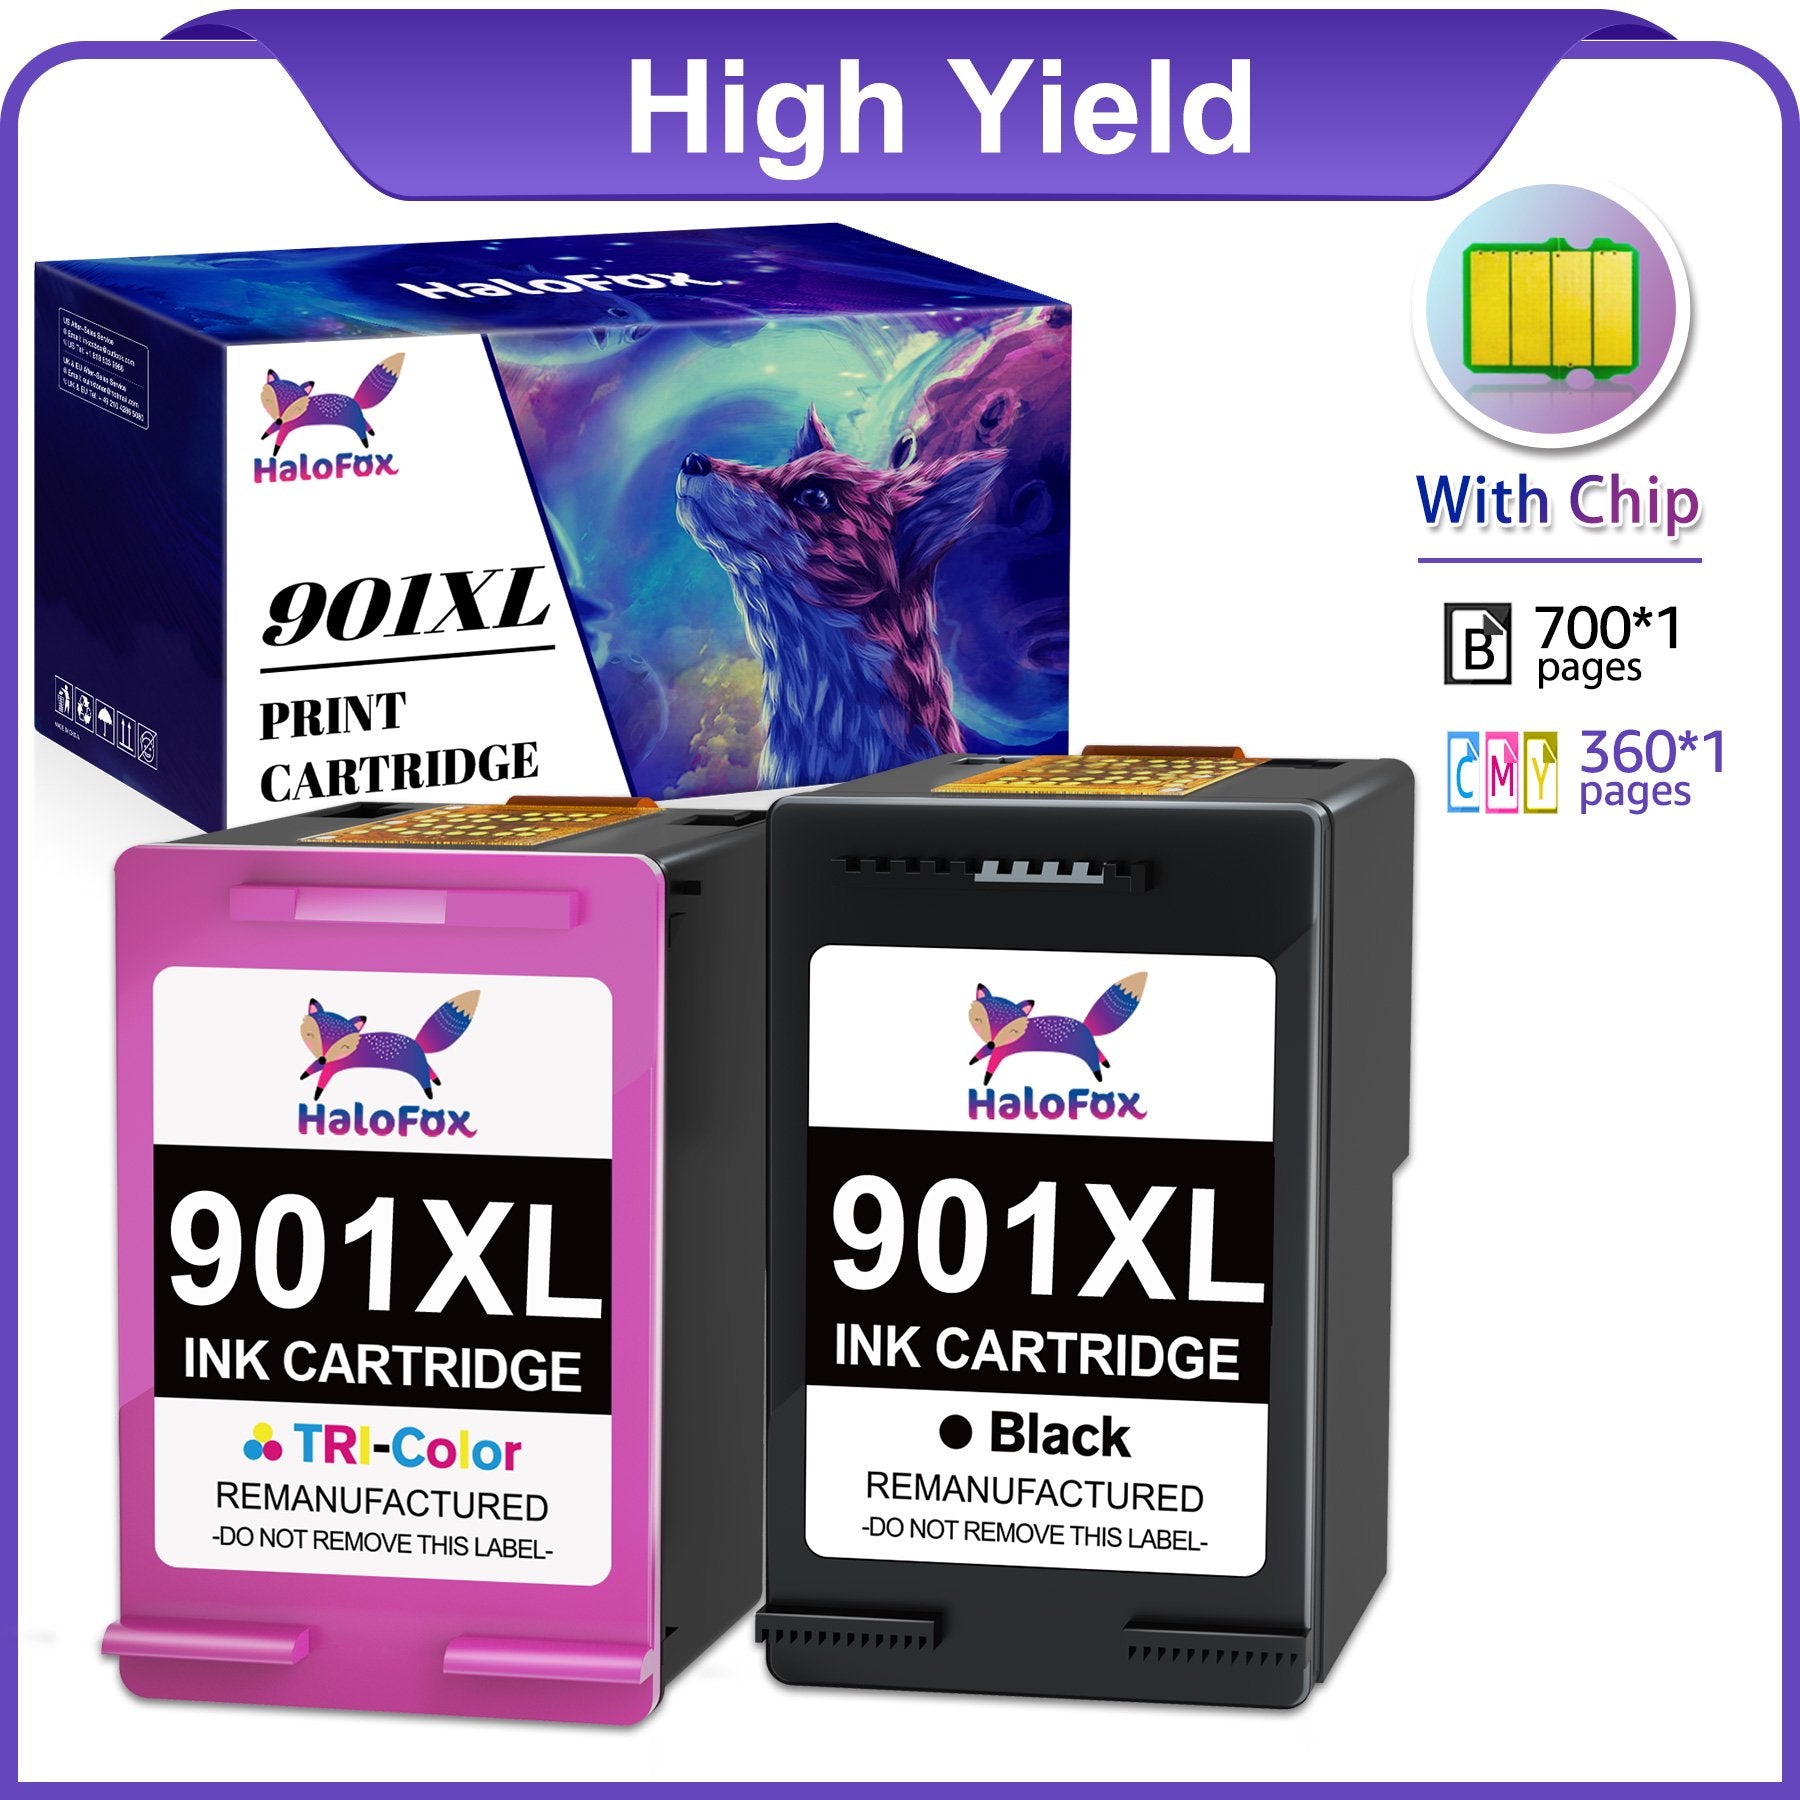 Halofox 901XL Ink Cartridges (1 Black & 1 Color, 2-Pack)